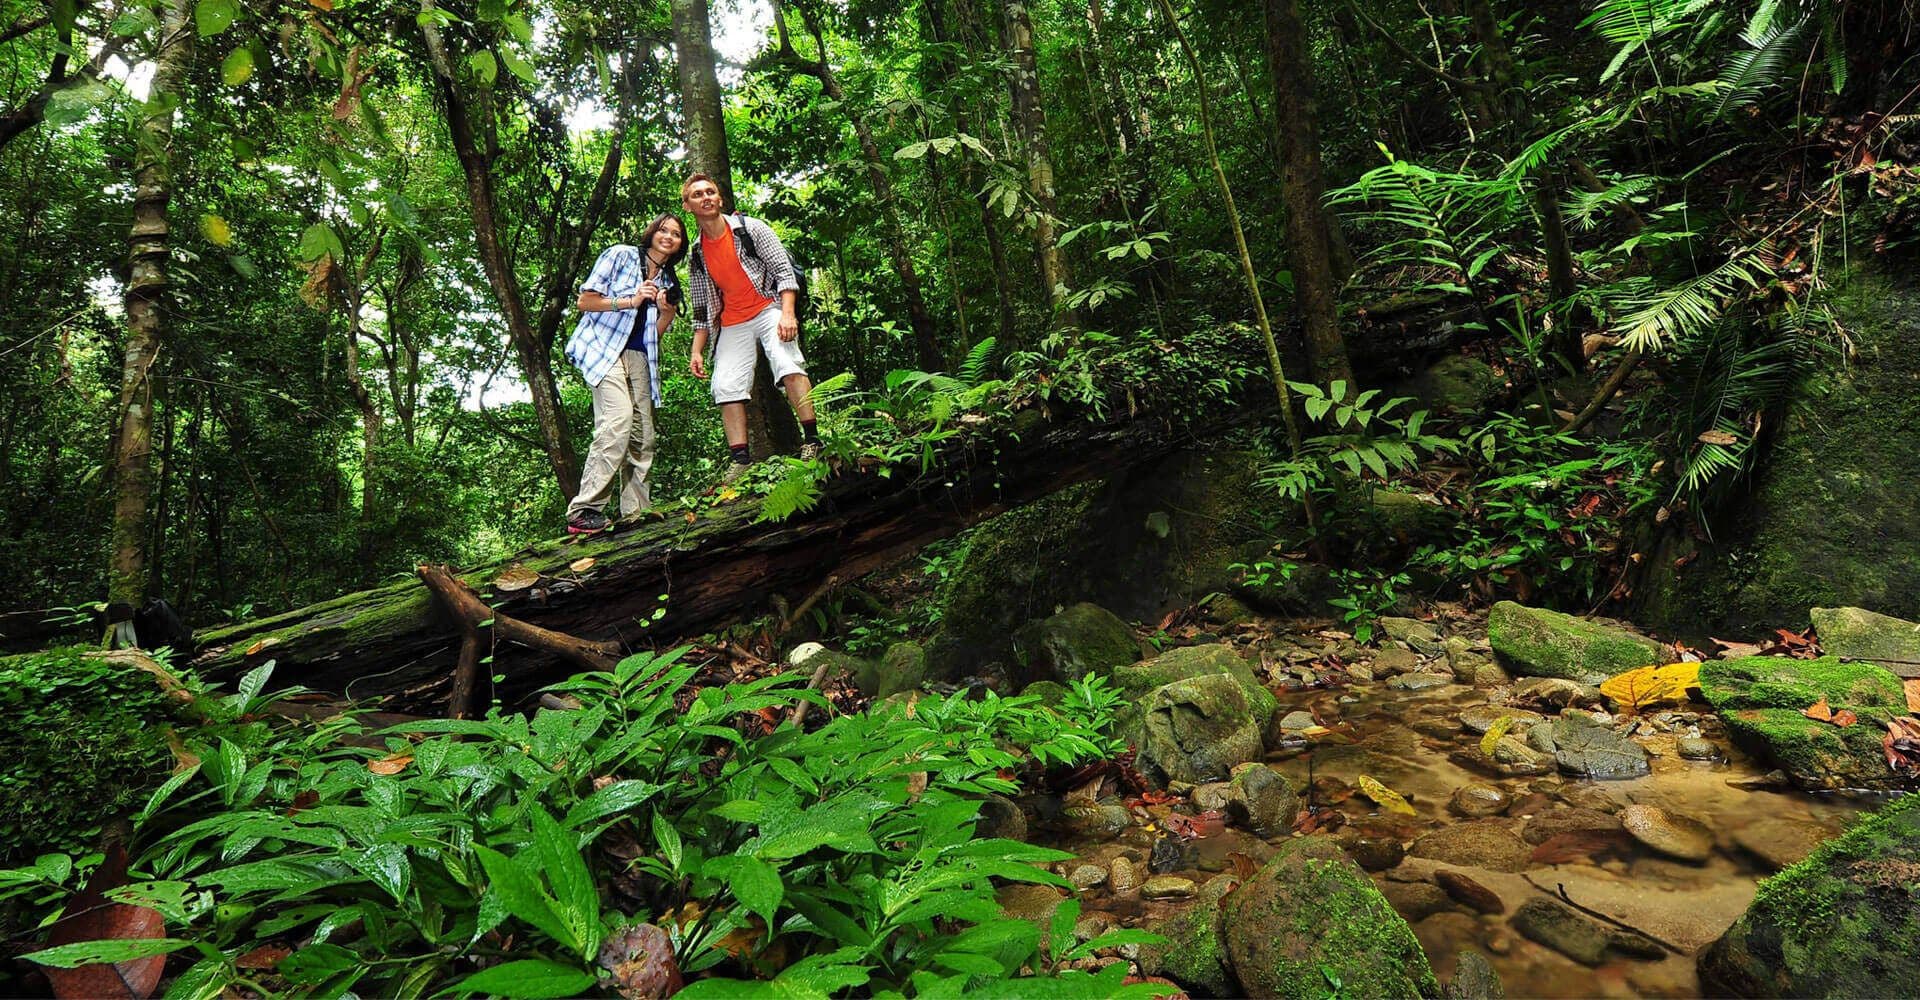 The tourists exploring flora and fauna in the rain forest Kithulgala, Sri Lanka